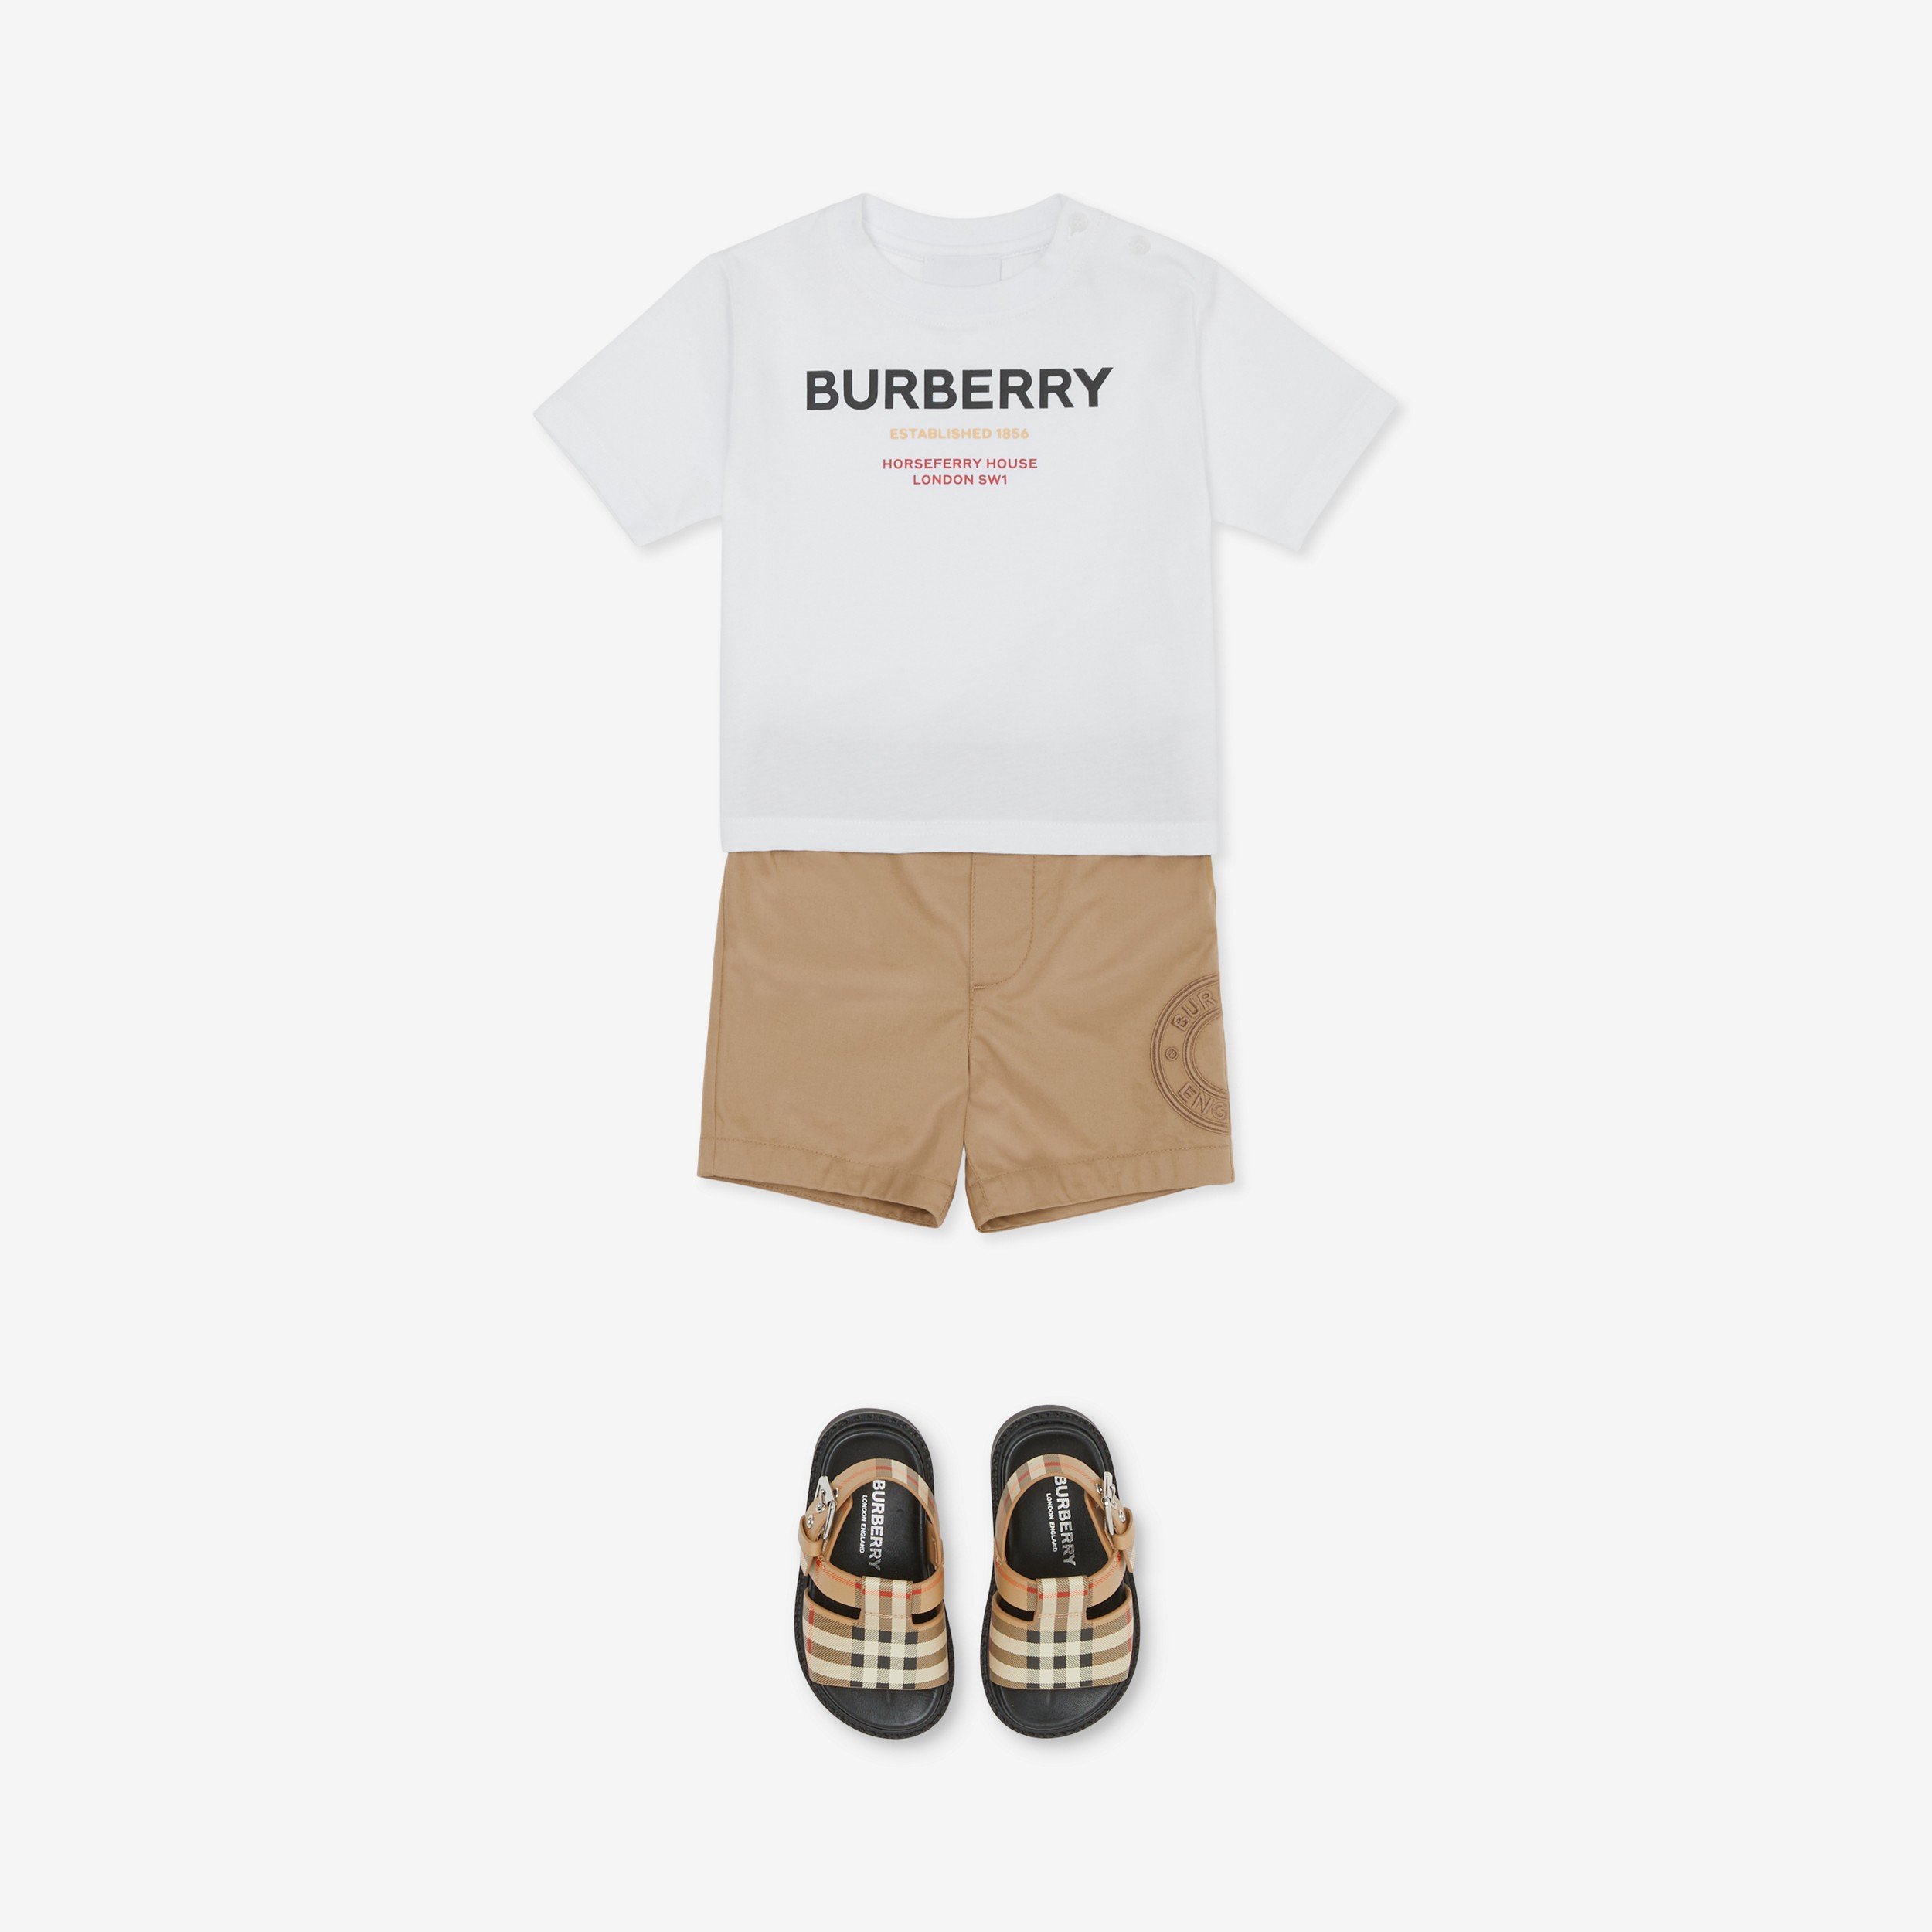 T-shirt in cotone con stampa Horseferry (Bianco) - Bambini | Sito ufficiale Burberry® - 4